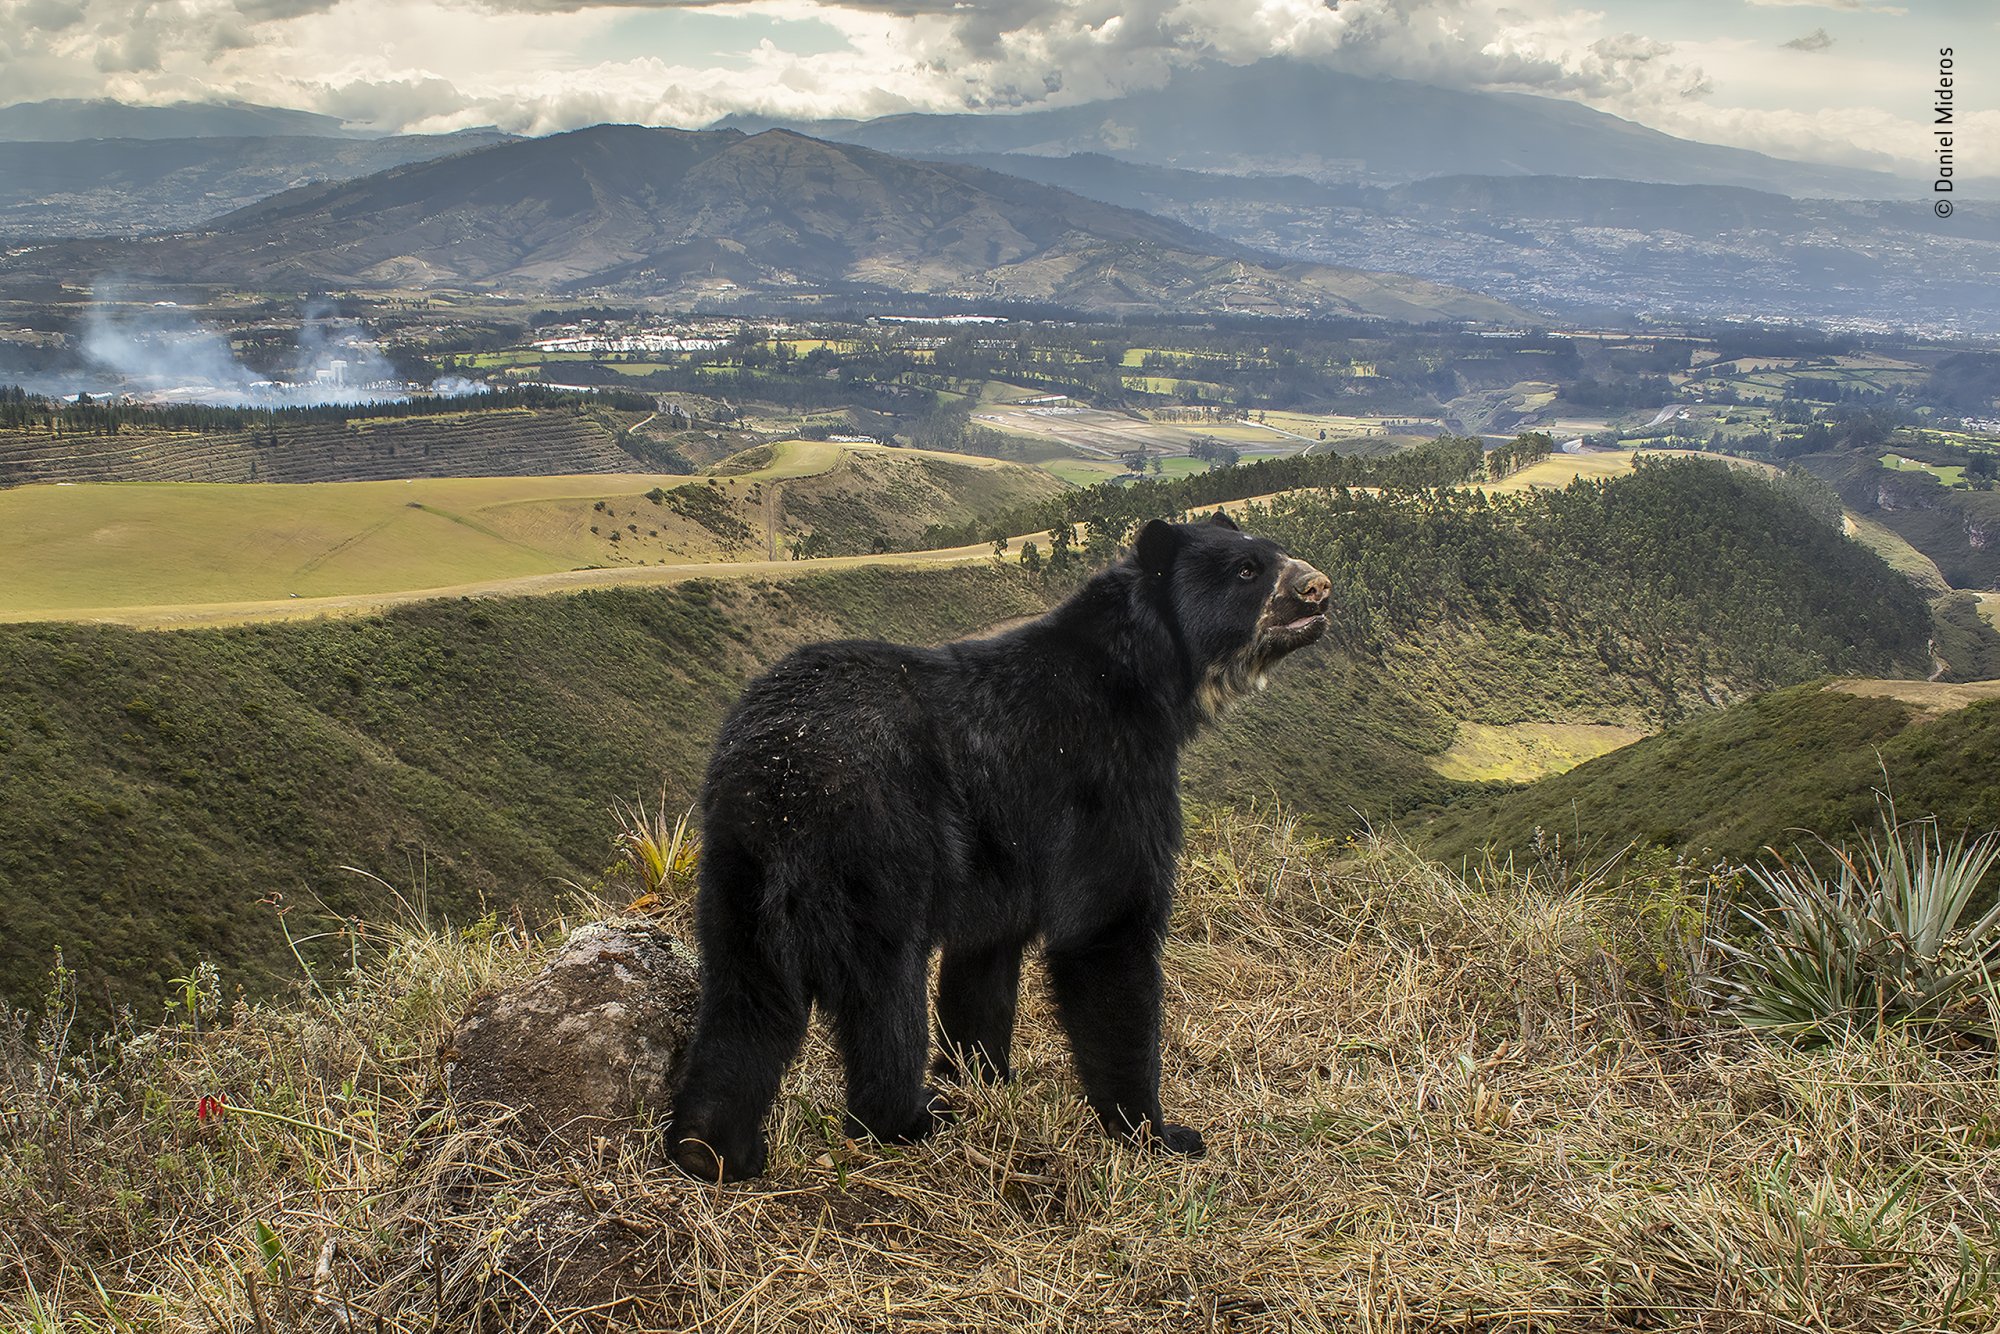 A bear looking across the natural landscape in Ecuador.